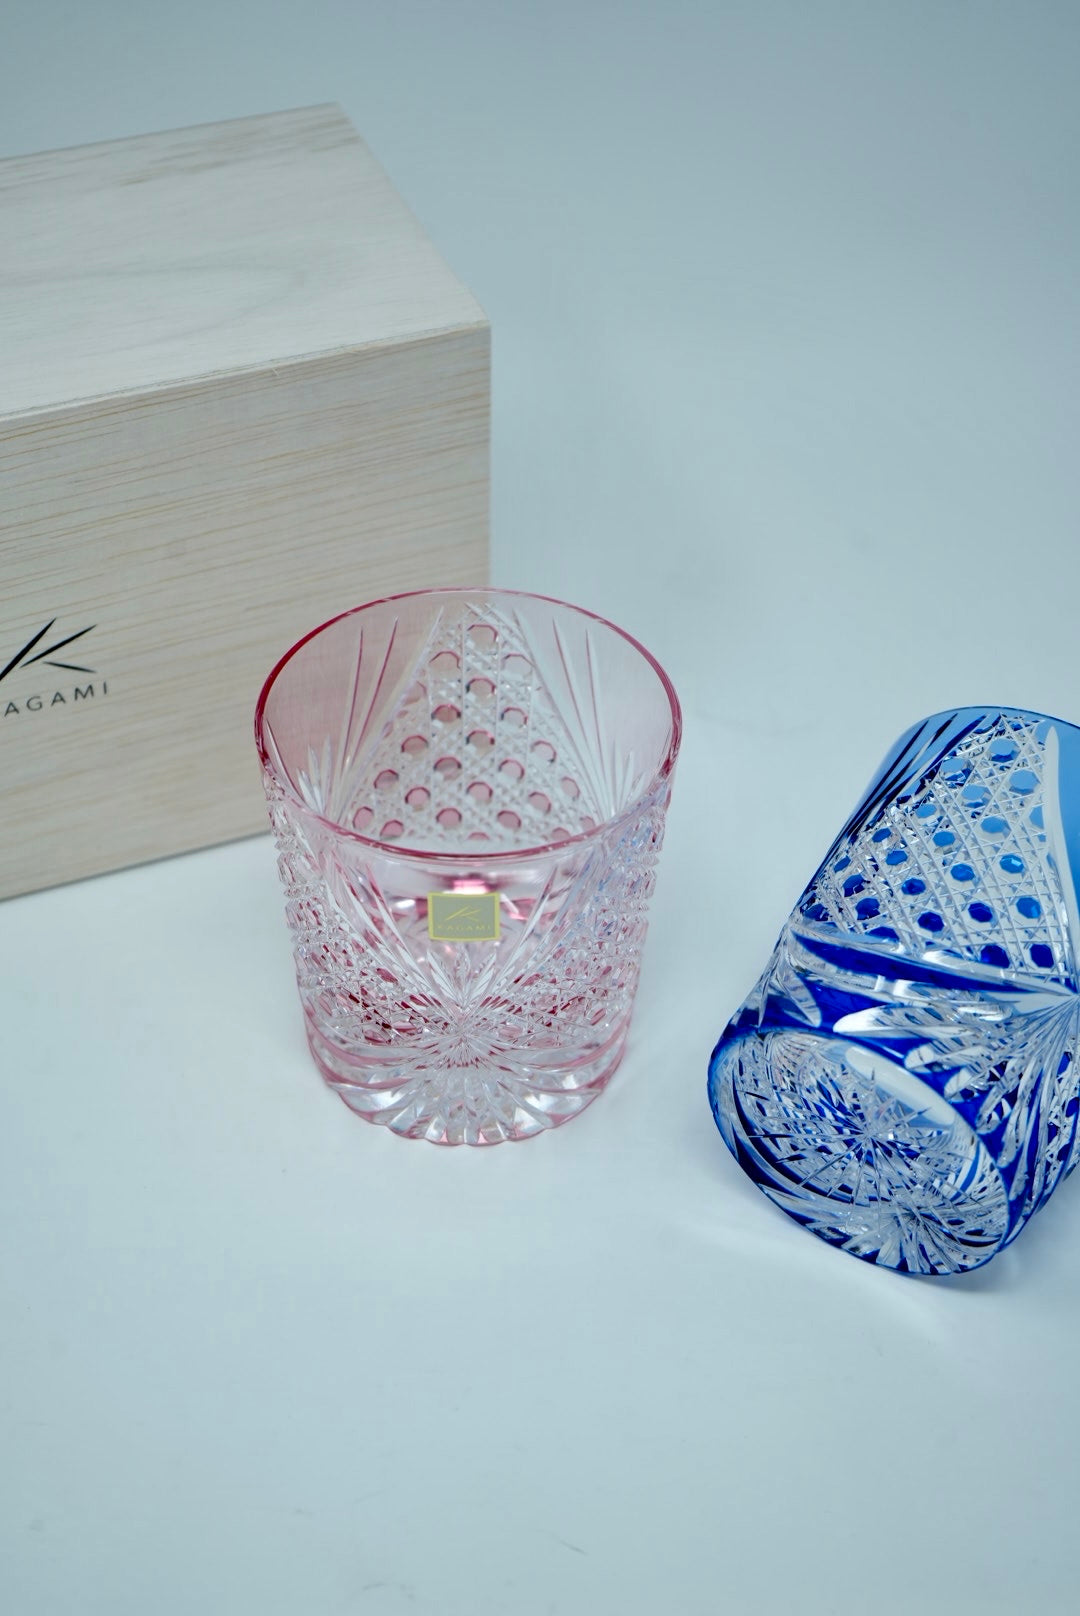 Kagami Crystal - A pair of Whisky Glasses, Edo Kiriko &quot;Tasuki (sash)&quot;